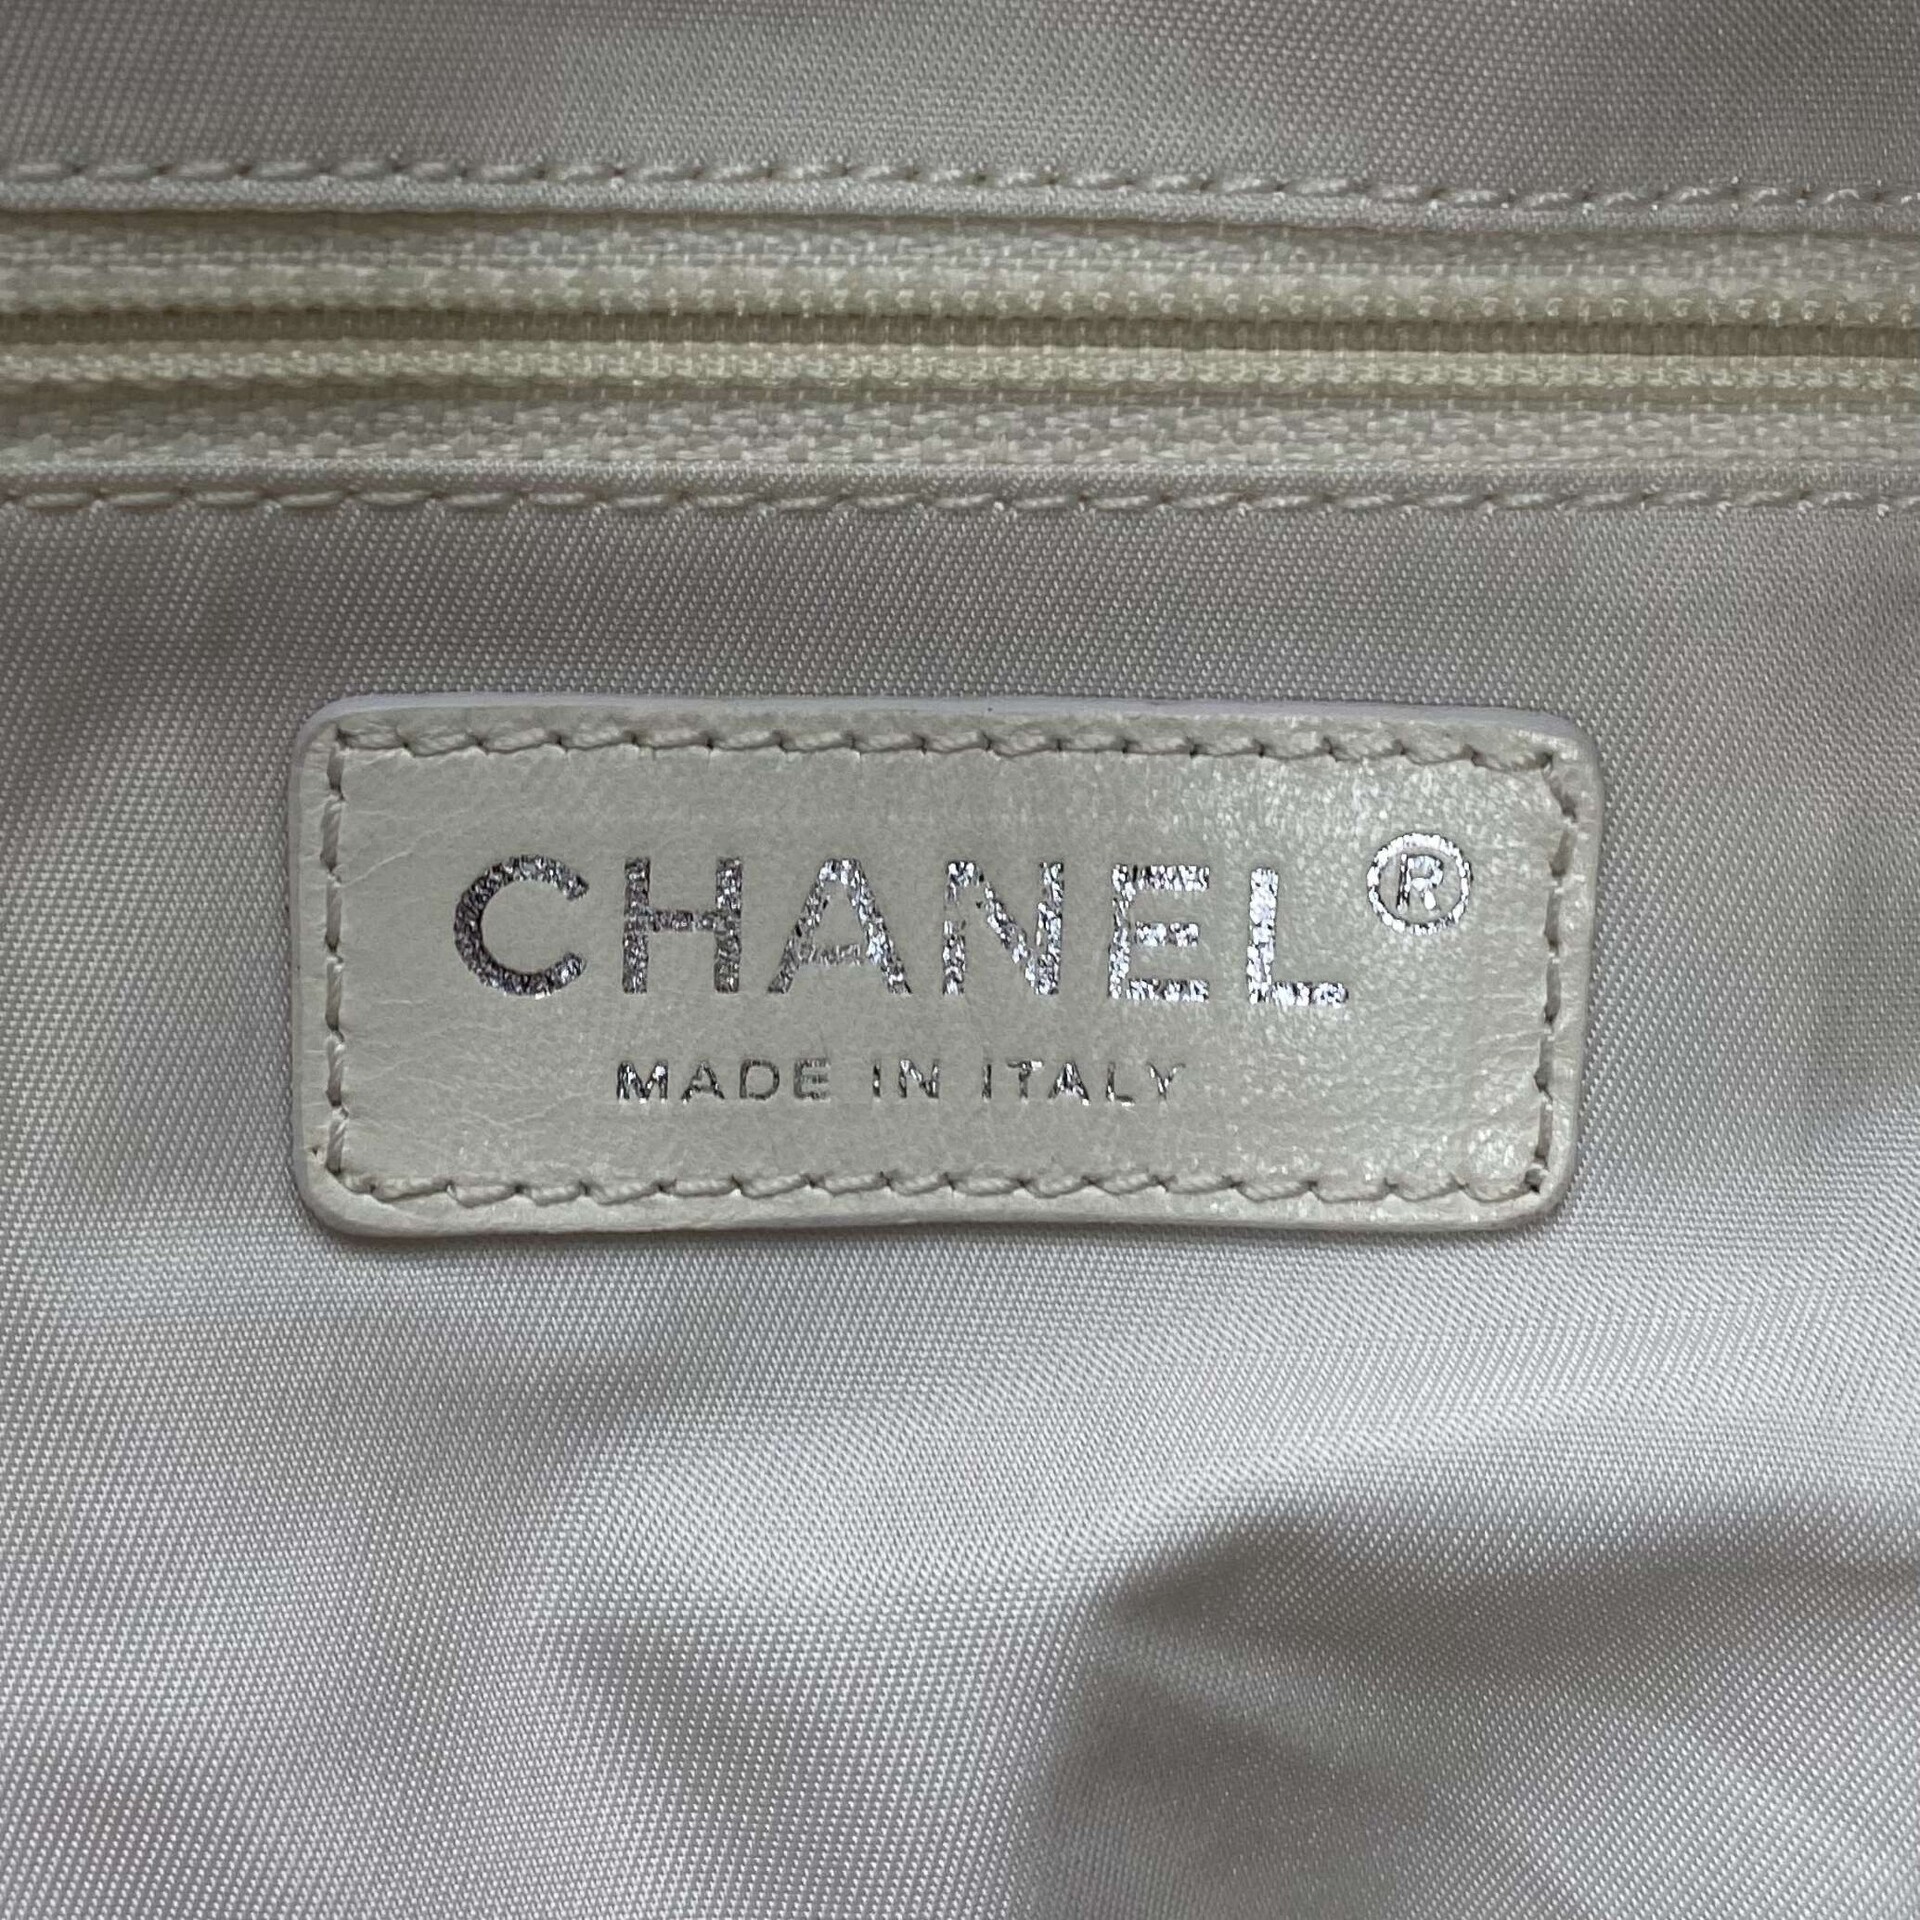 Bolsa Chanel Metalizada